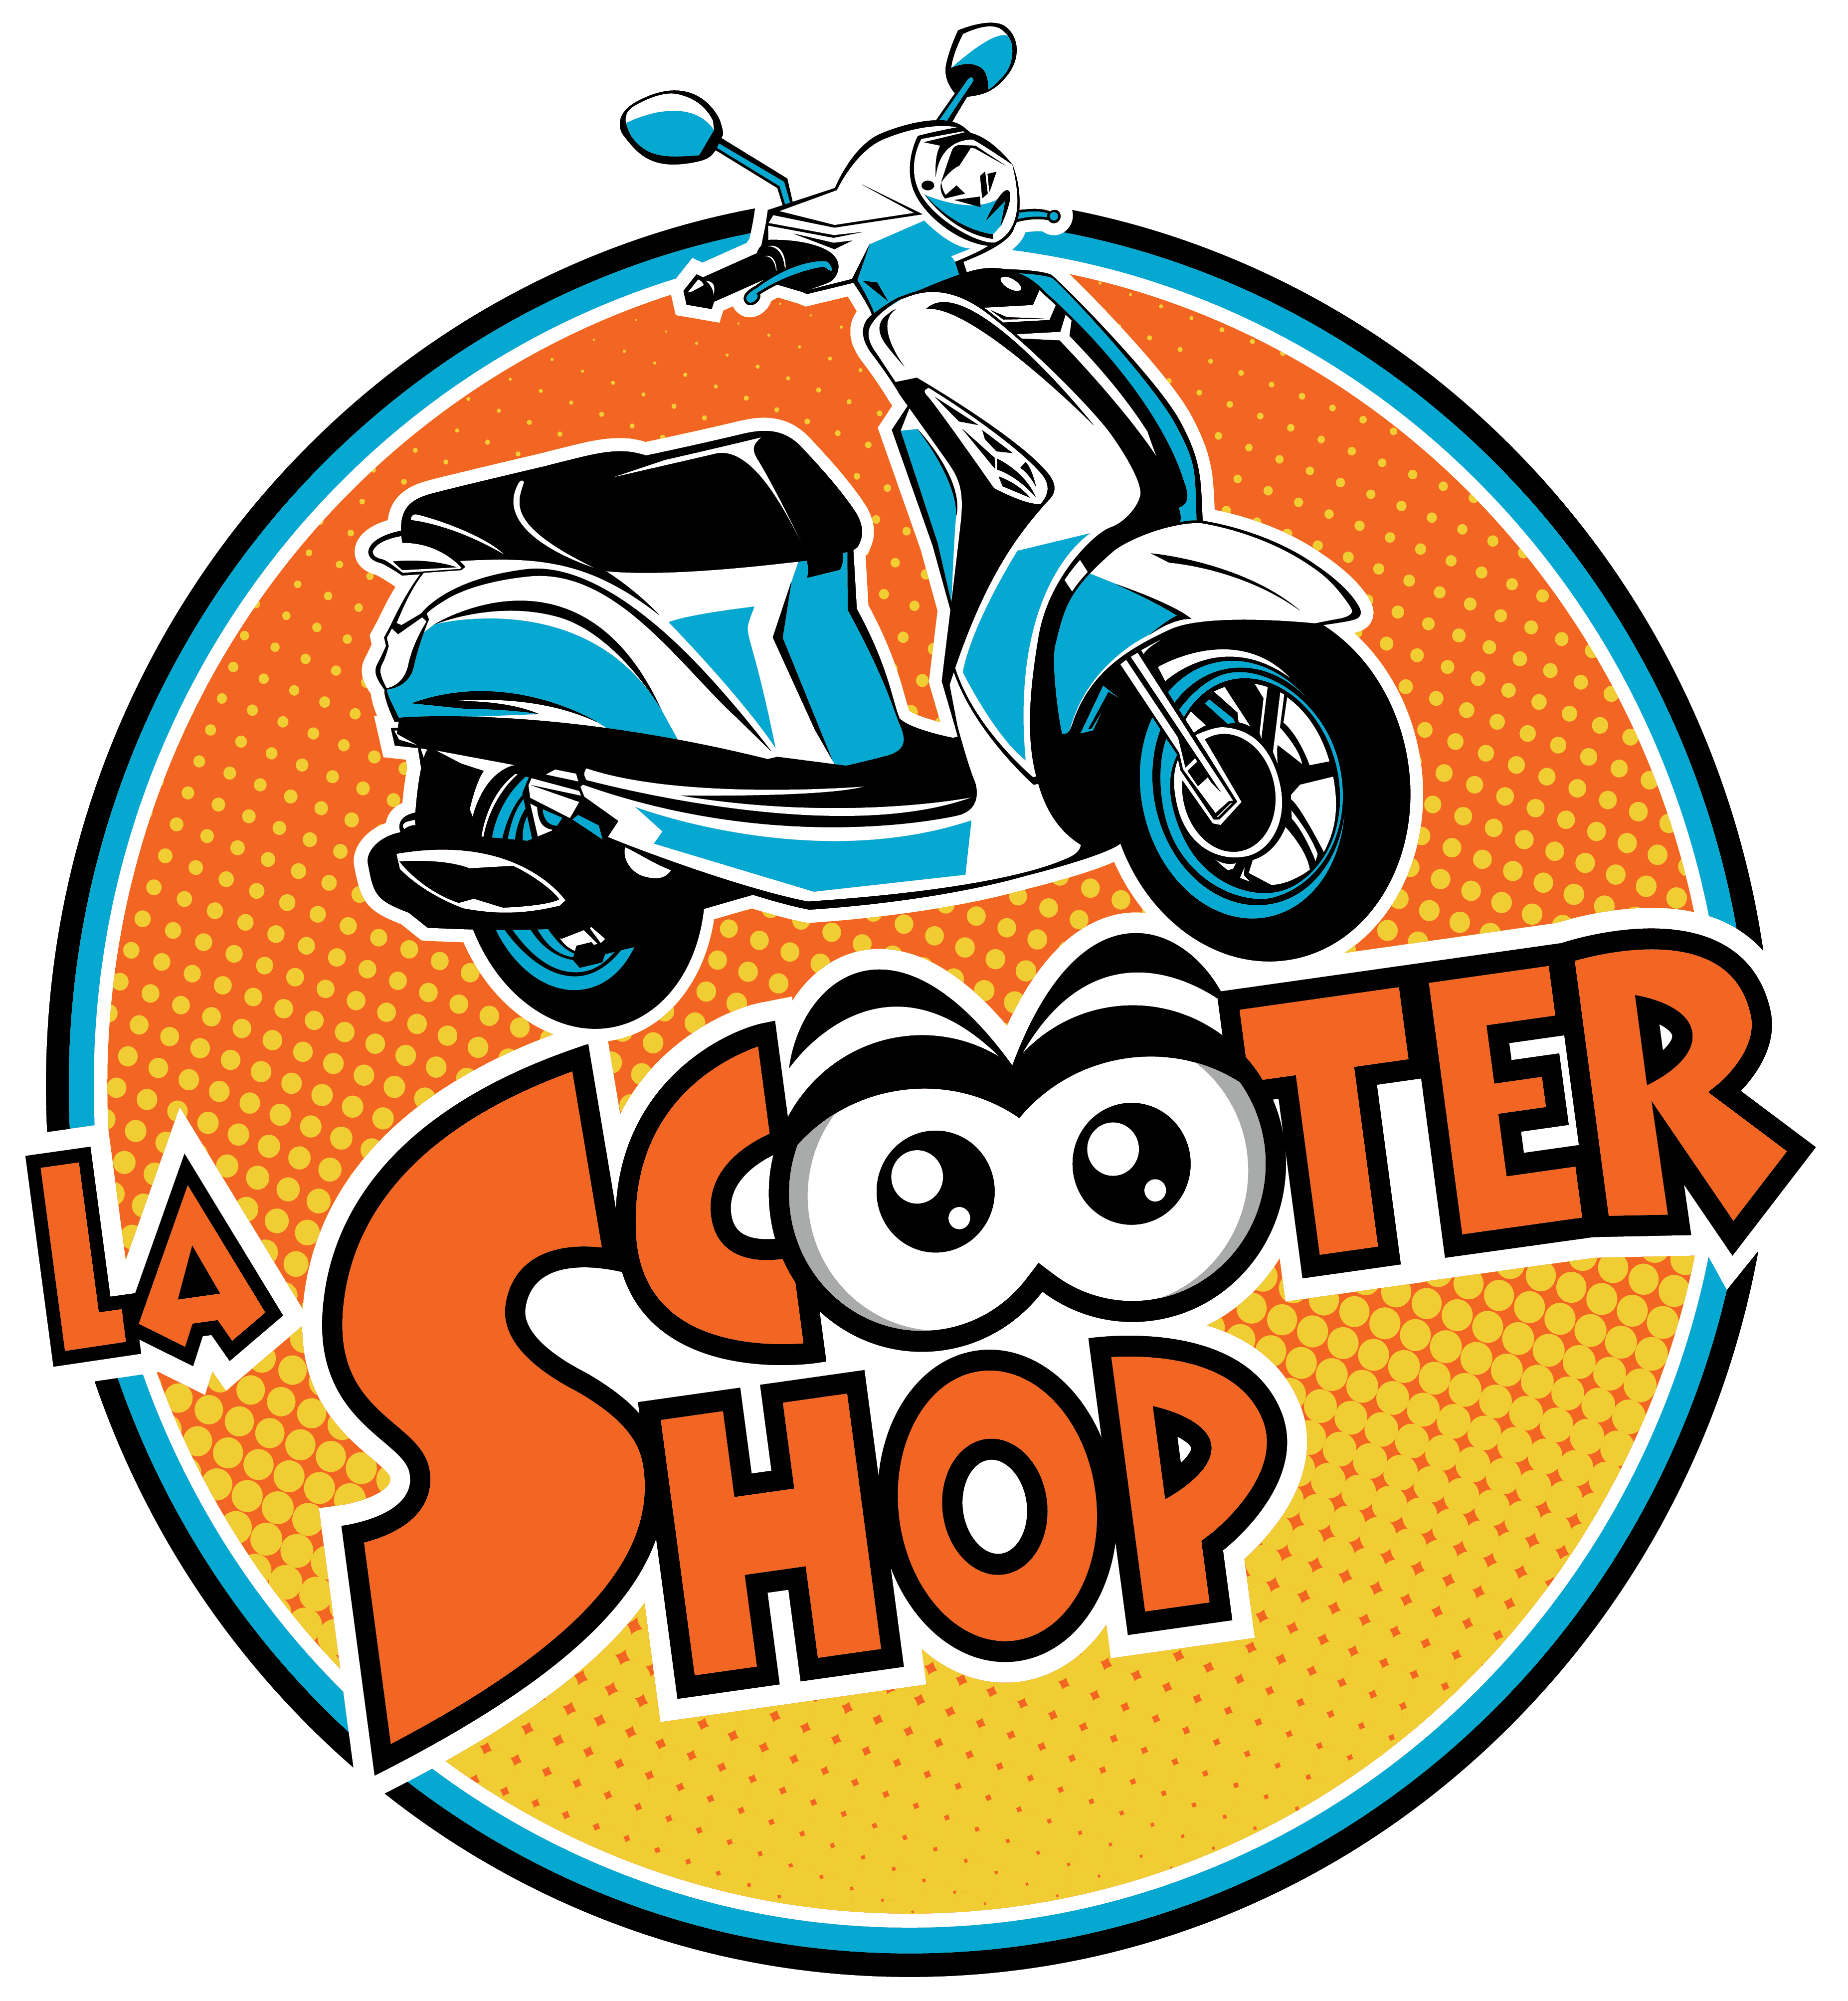 (c) Lascootershop.ca